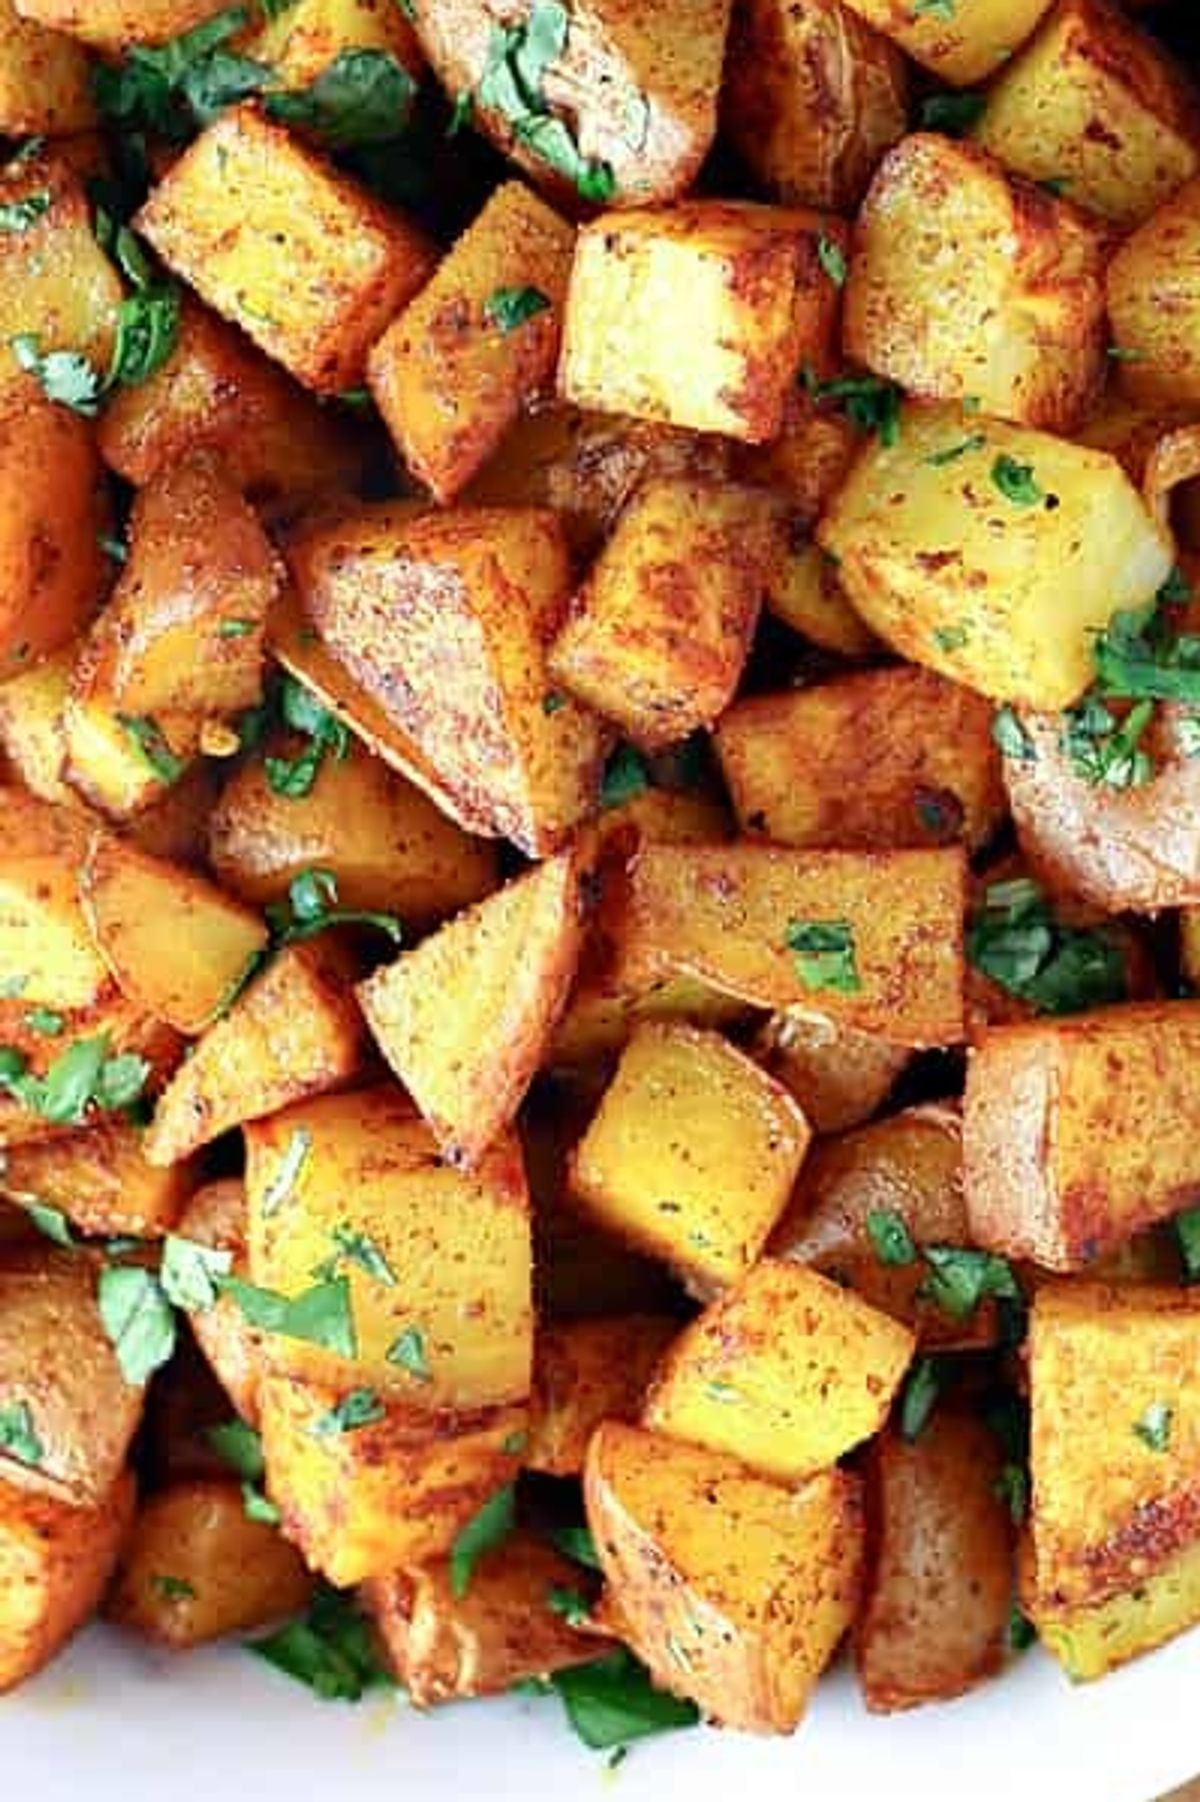 Moroccan Roasted Potatoes | Let's Dish Recipes - My Recipe Magic